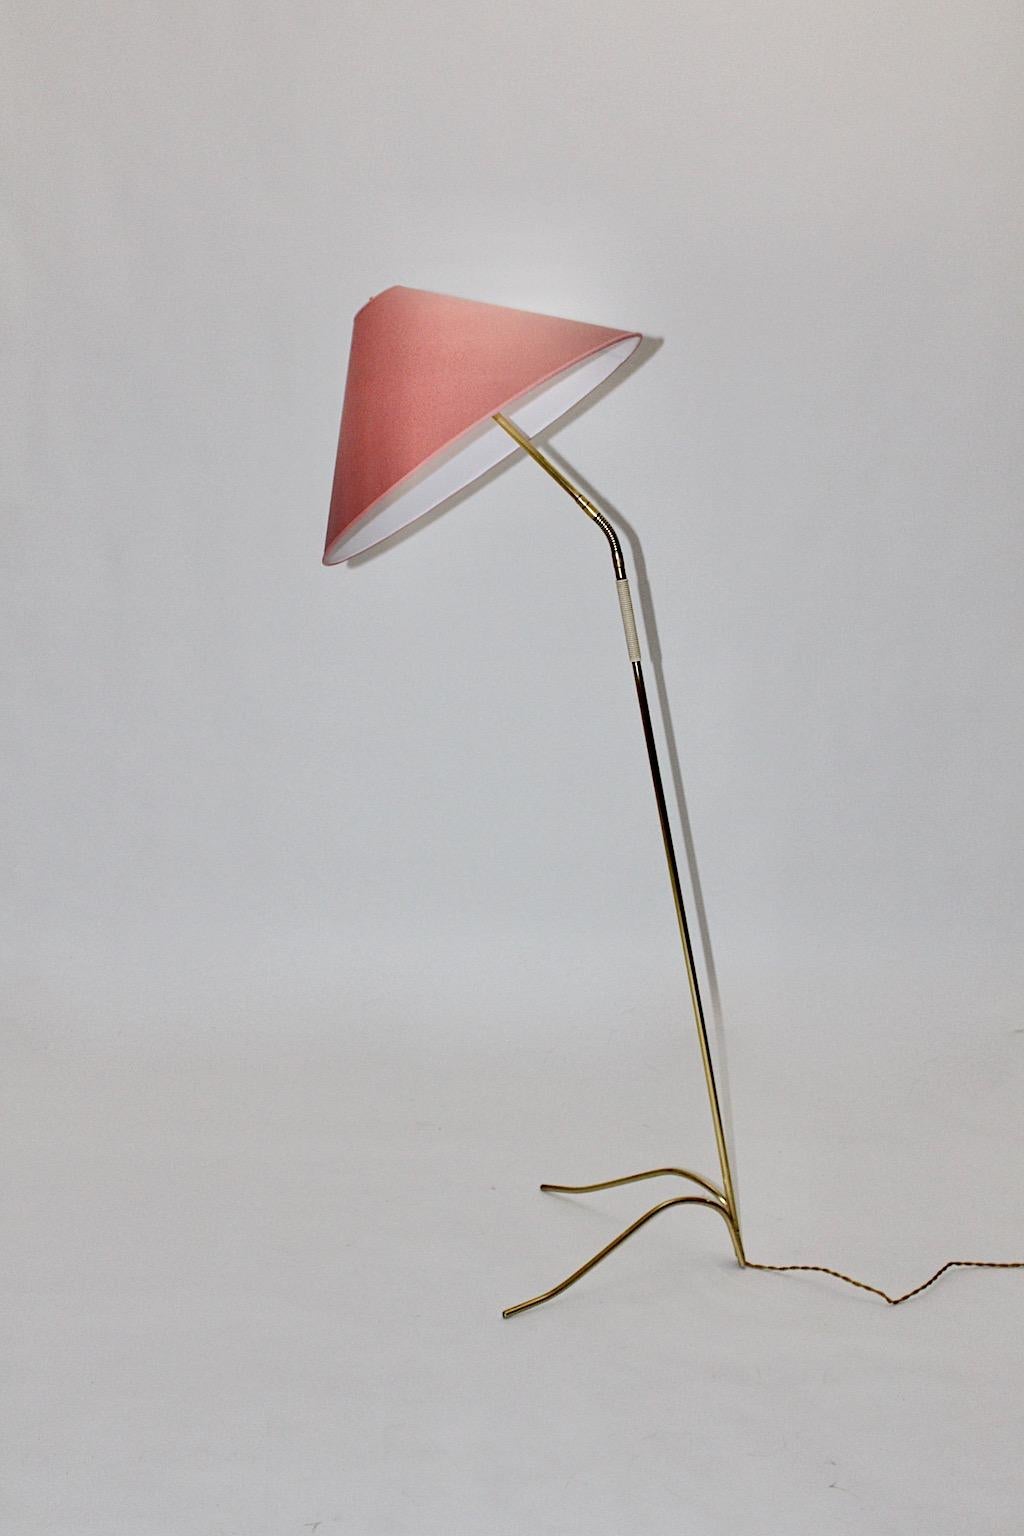 Brass Vintage Mid-Century Modern Splayfoot Floor Lamp Rupert Nikoll 1950 Austria For Sale 6